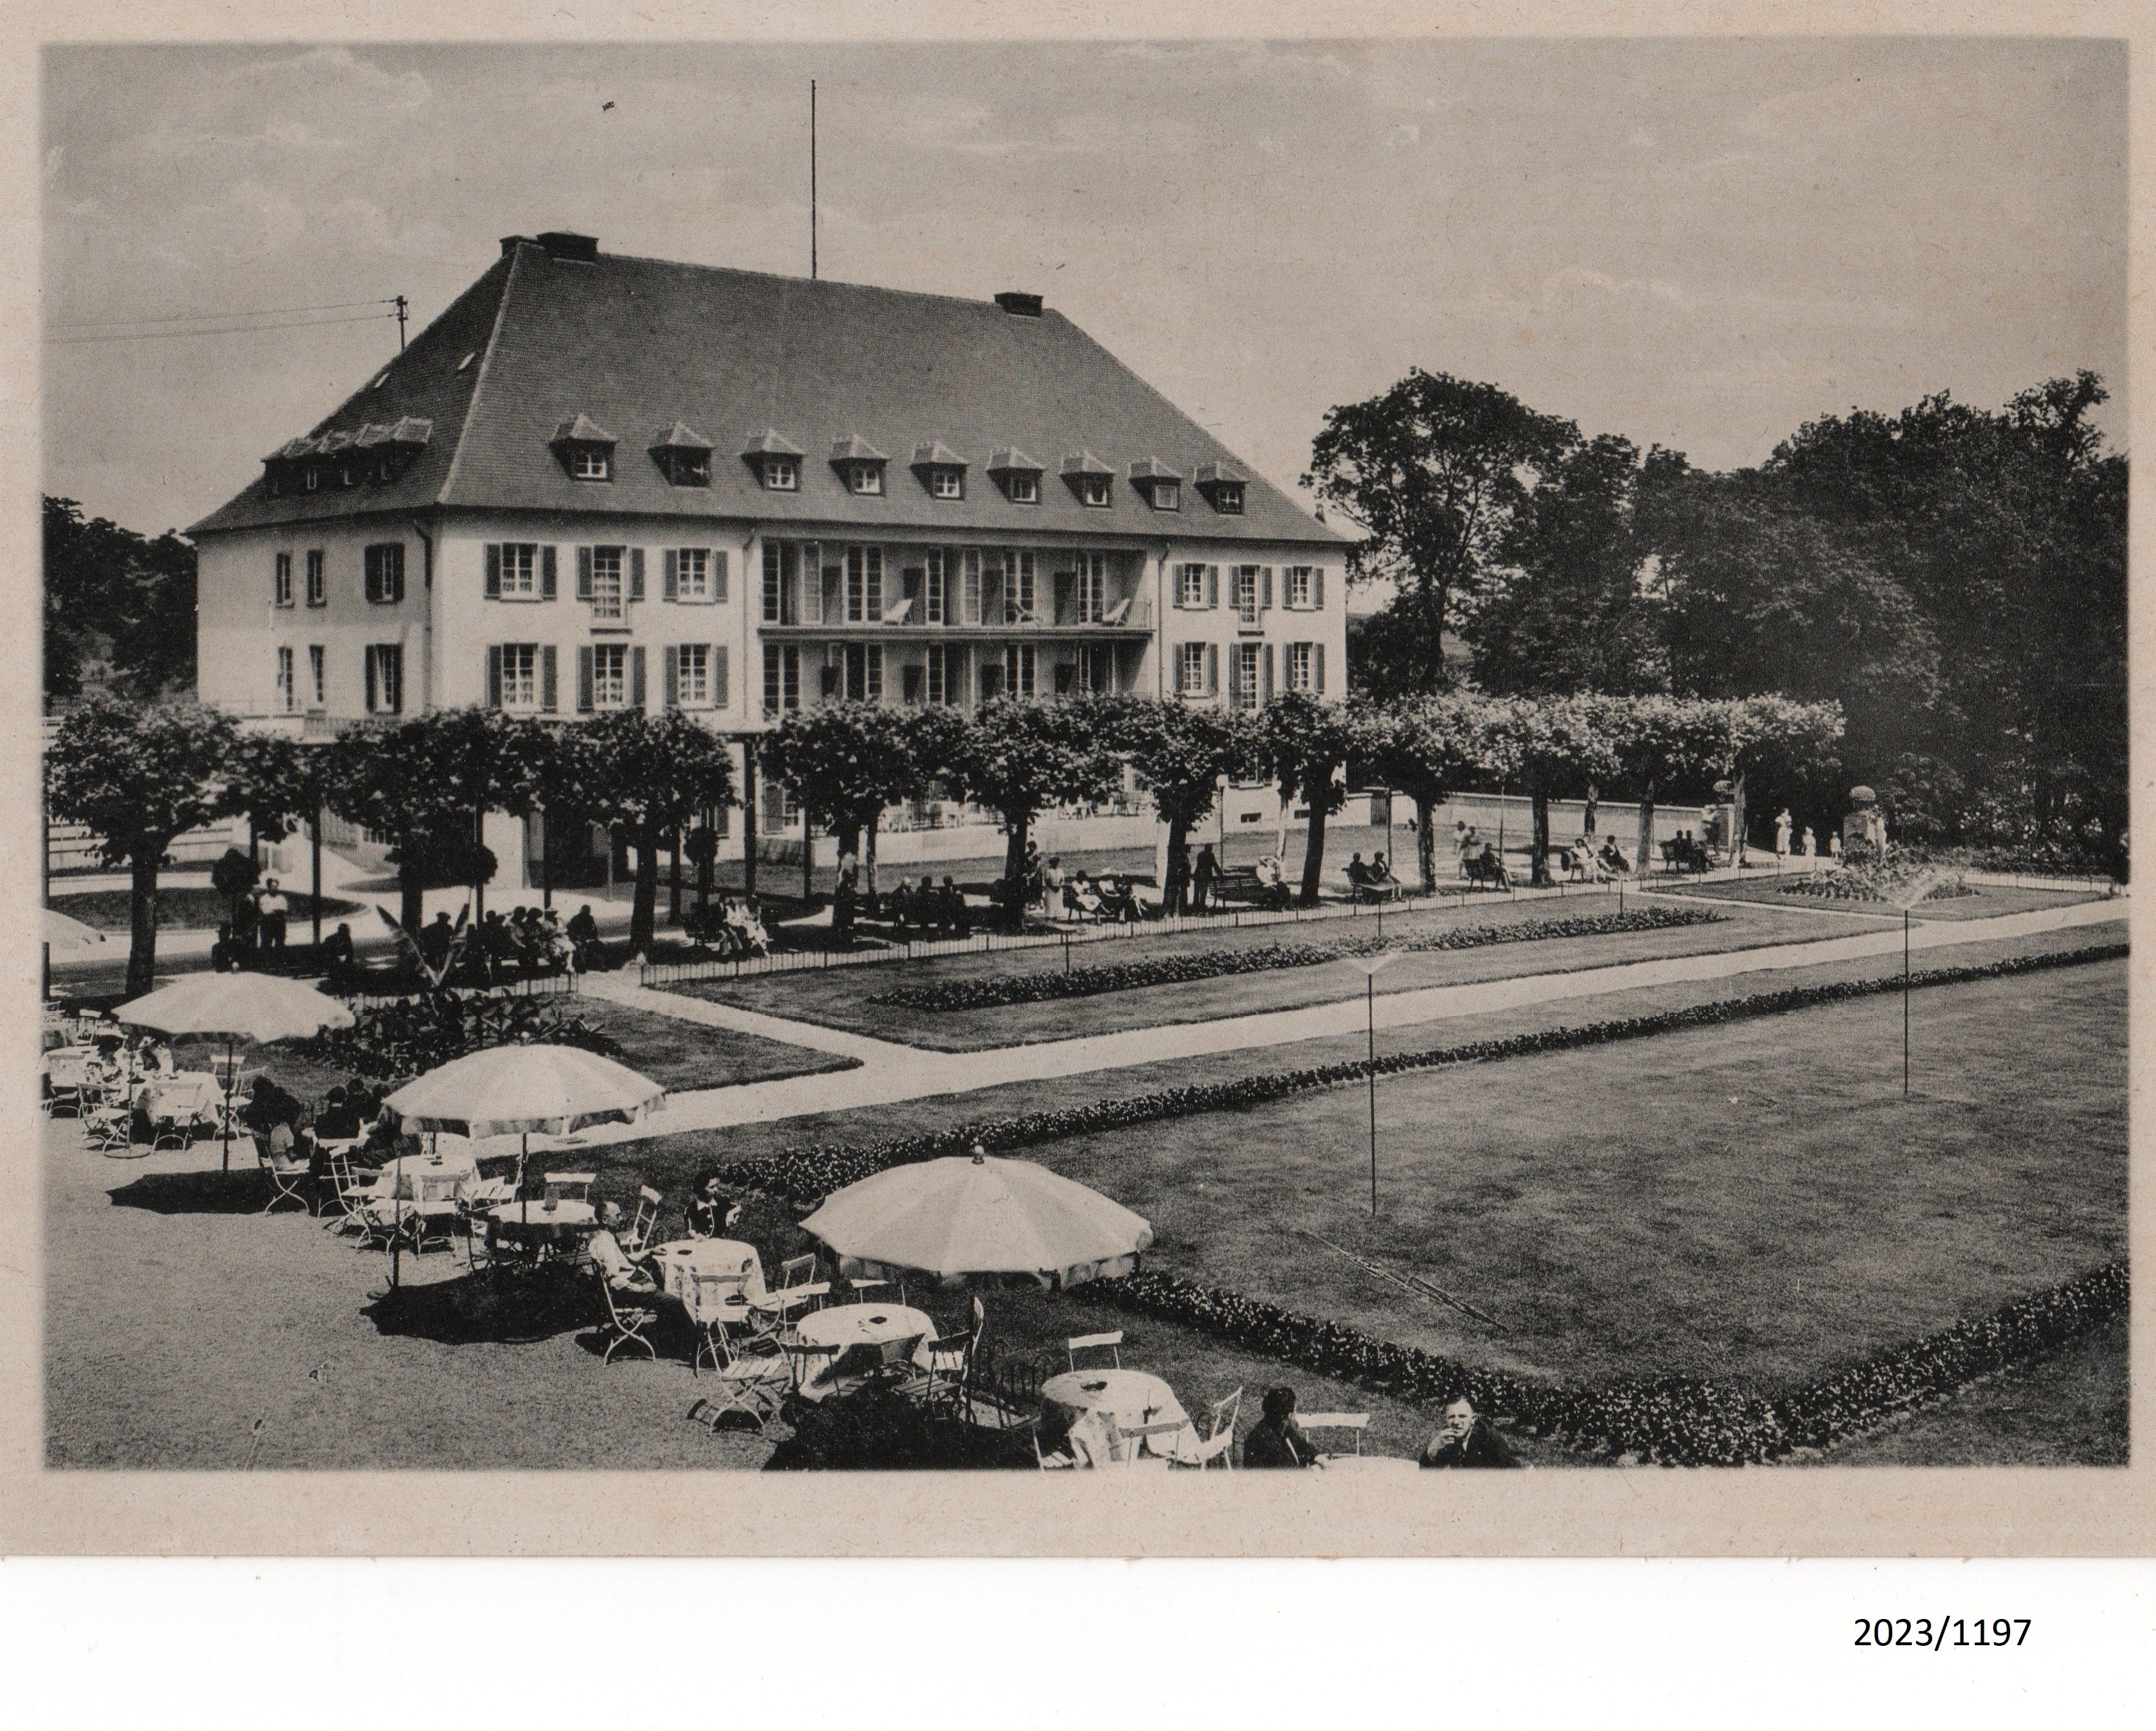 Bad Dürkheim, Kurparkhotel und oberer Kurgarten, 1950er Jahre (Stadtmuseum Bad Dürkheim im Kulturzentrum Haus Catoir CC BY-NC-SA)